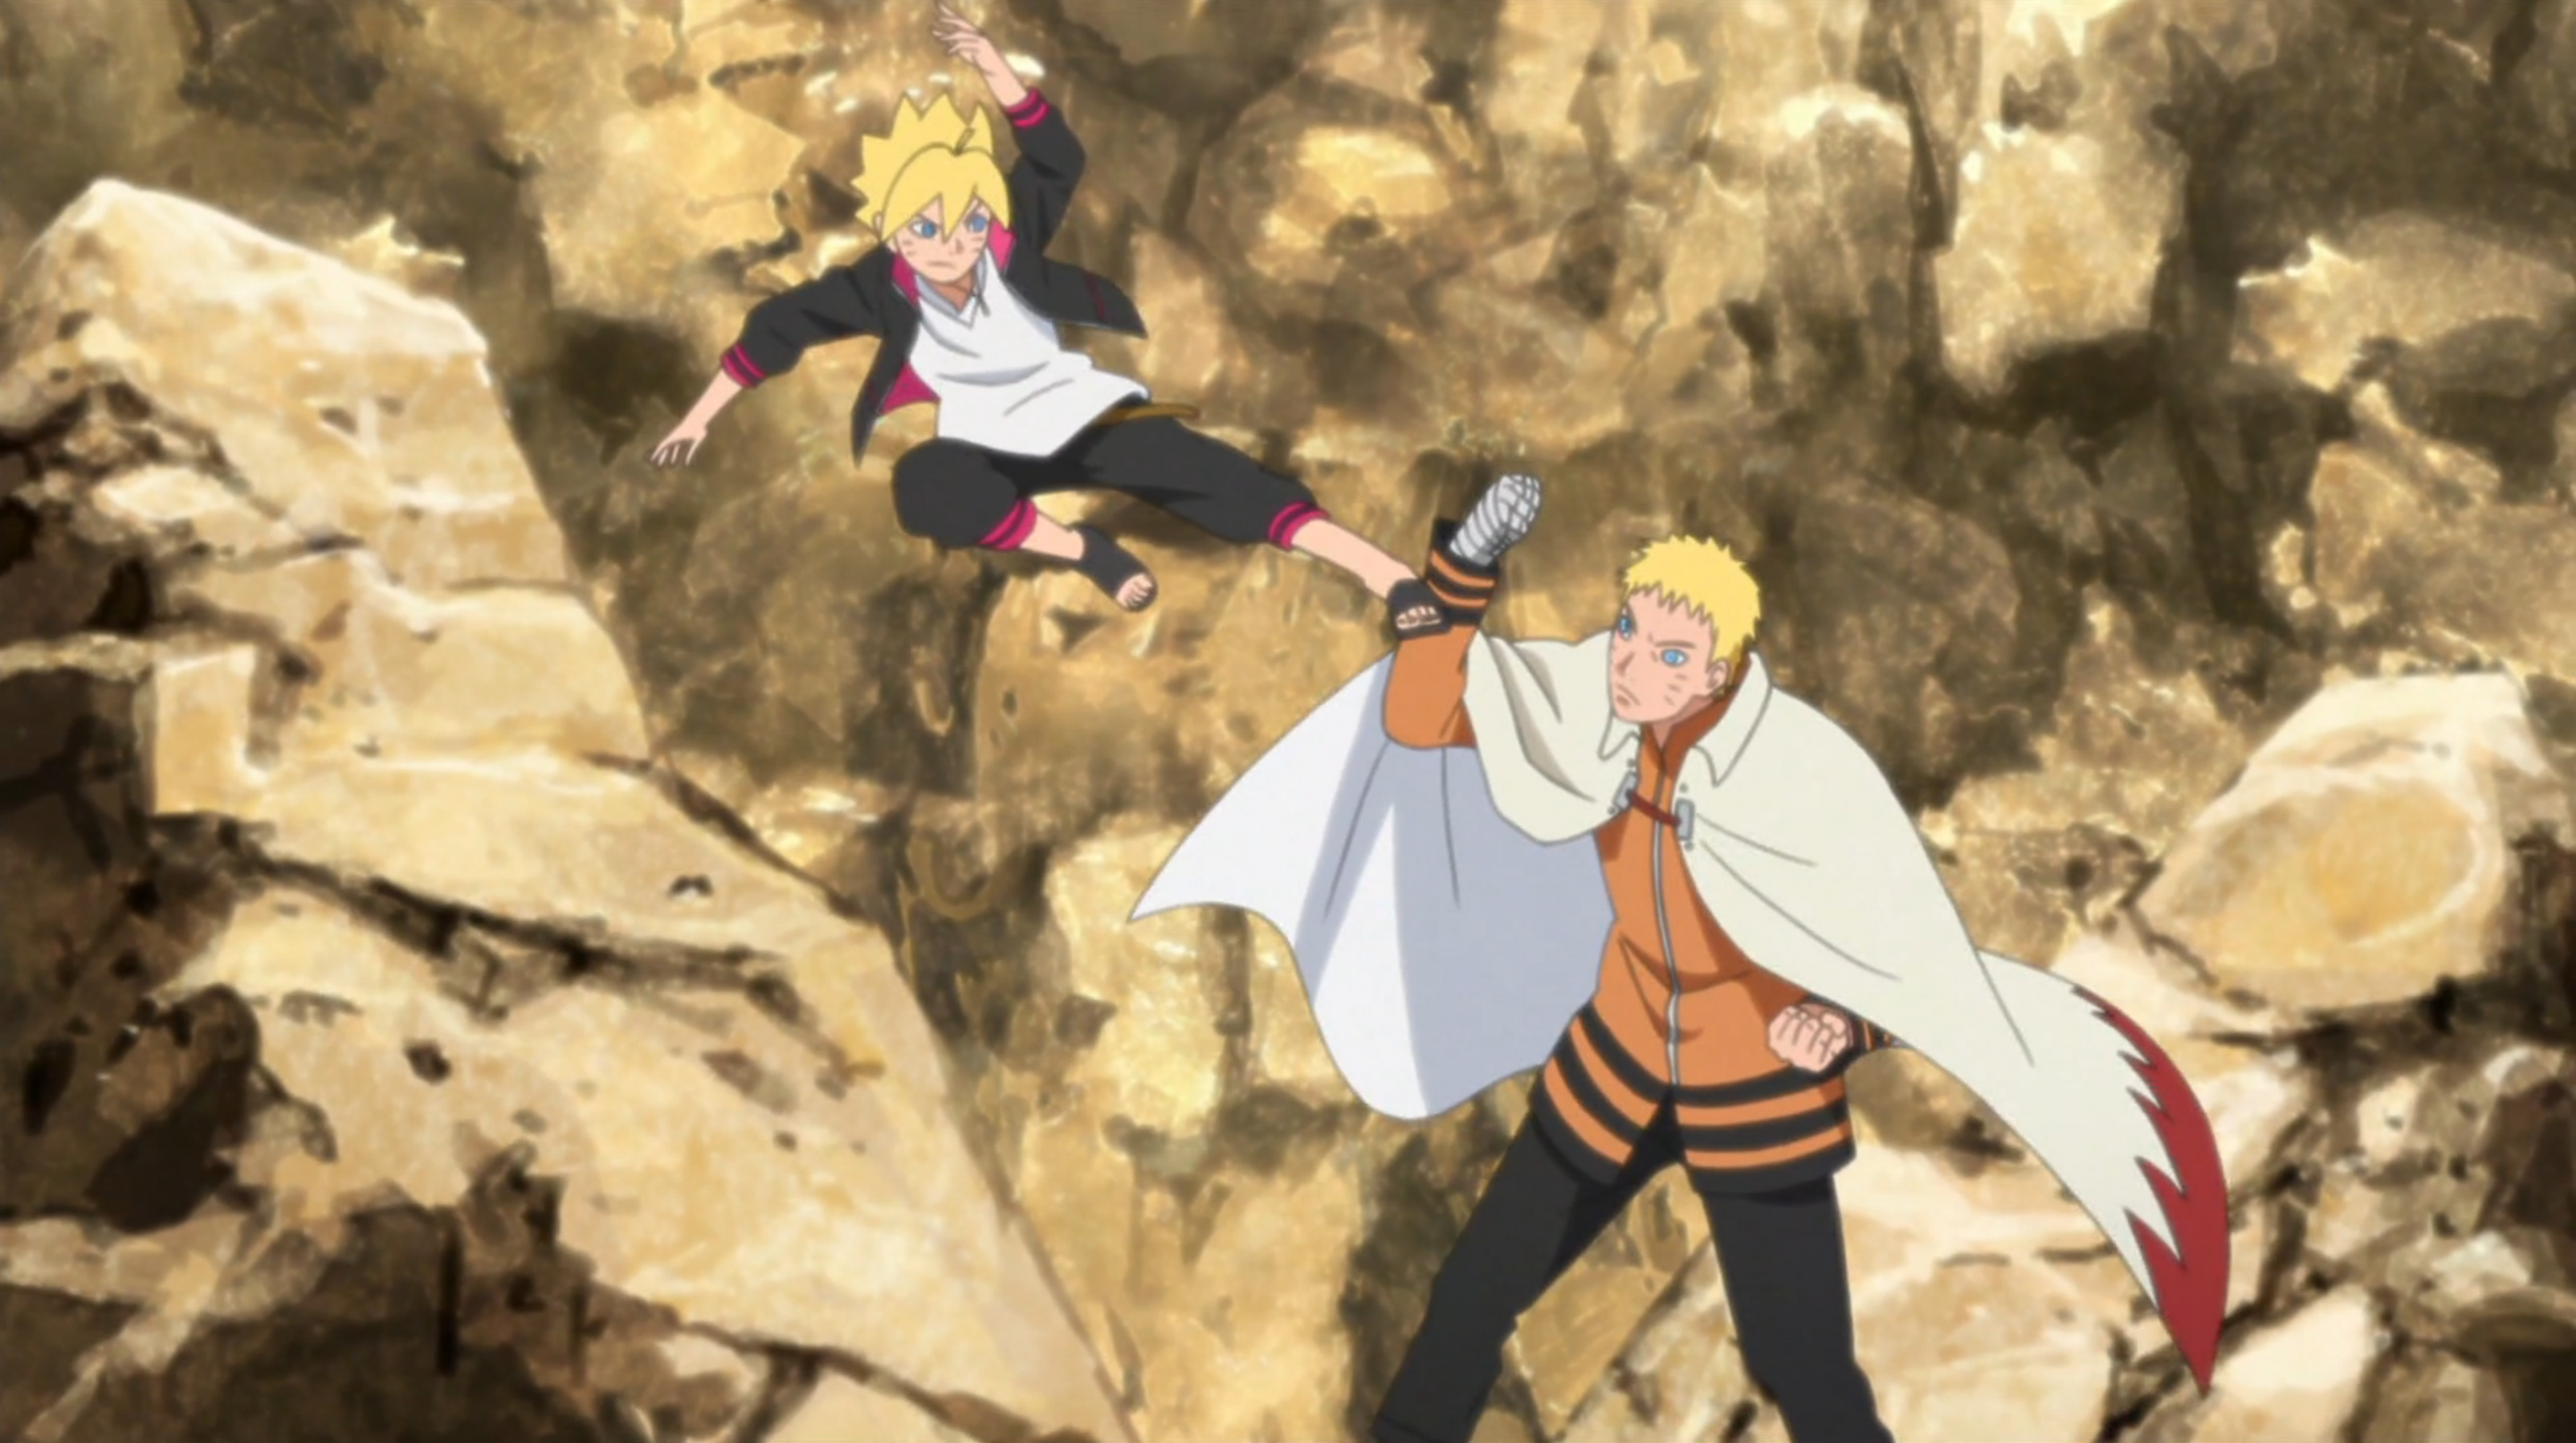 How old is Himawari in Boruto: Naruto Next Generations? - Quora